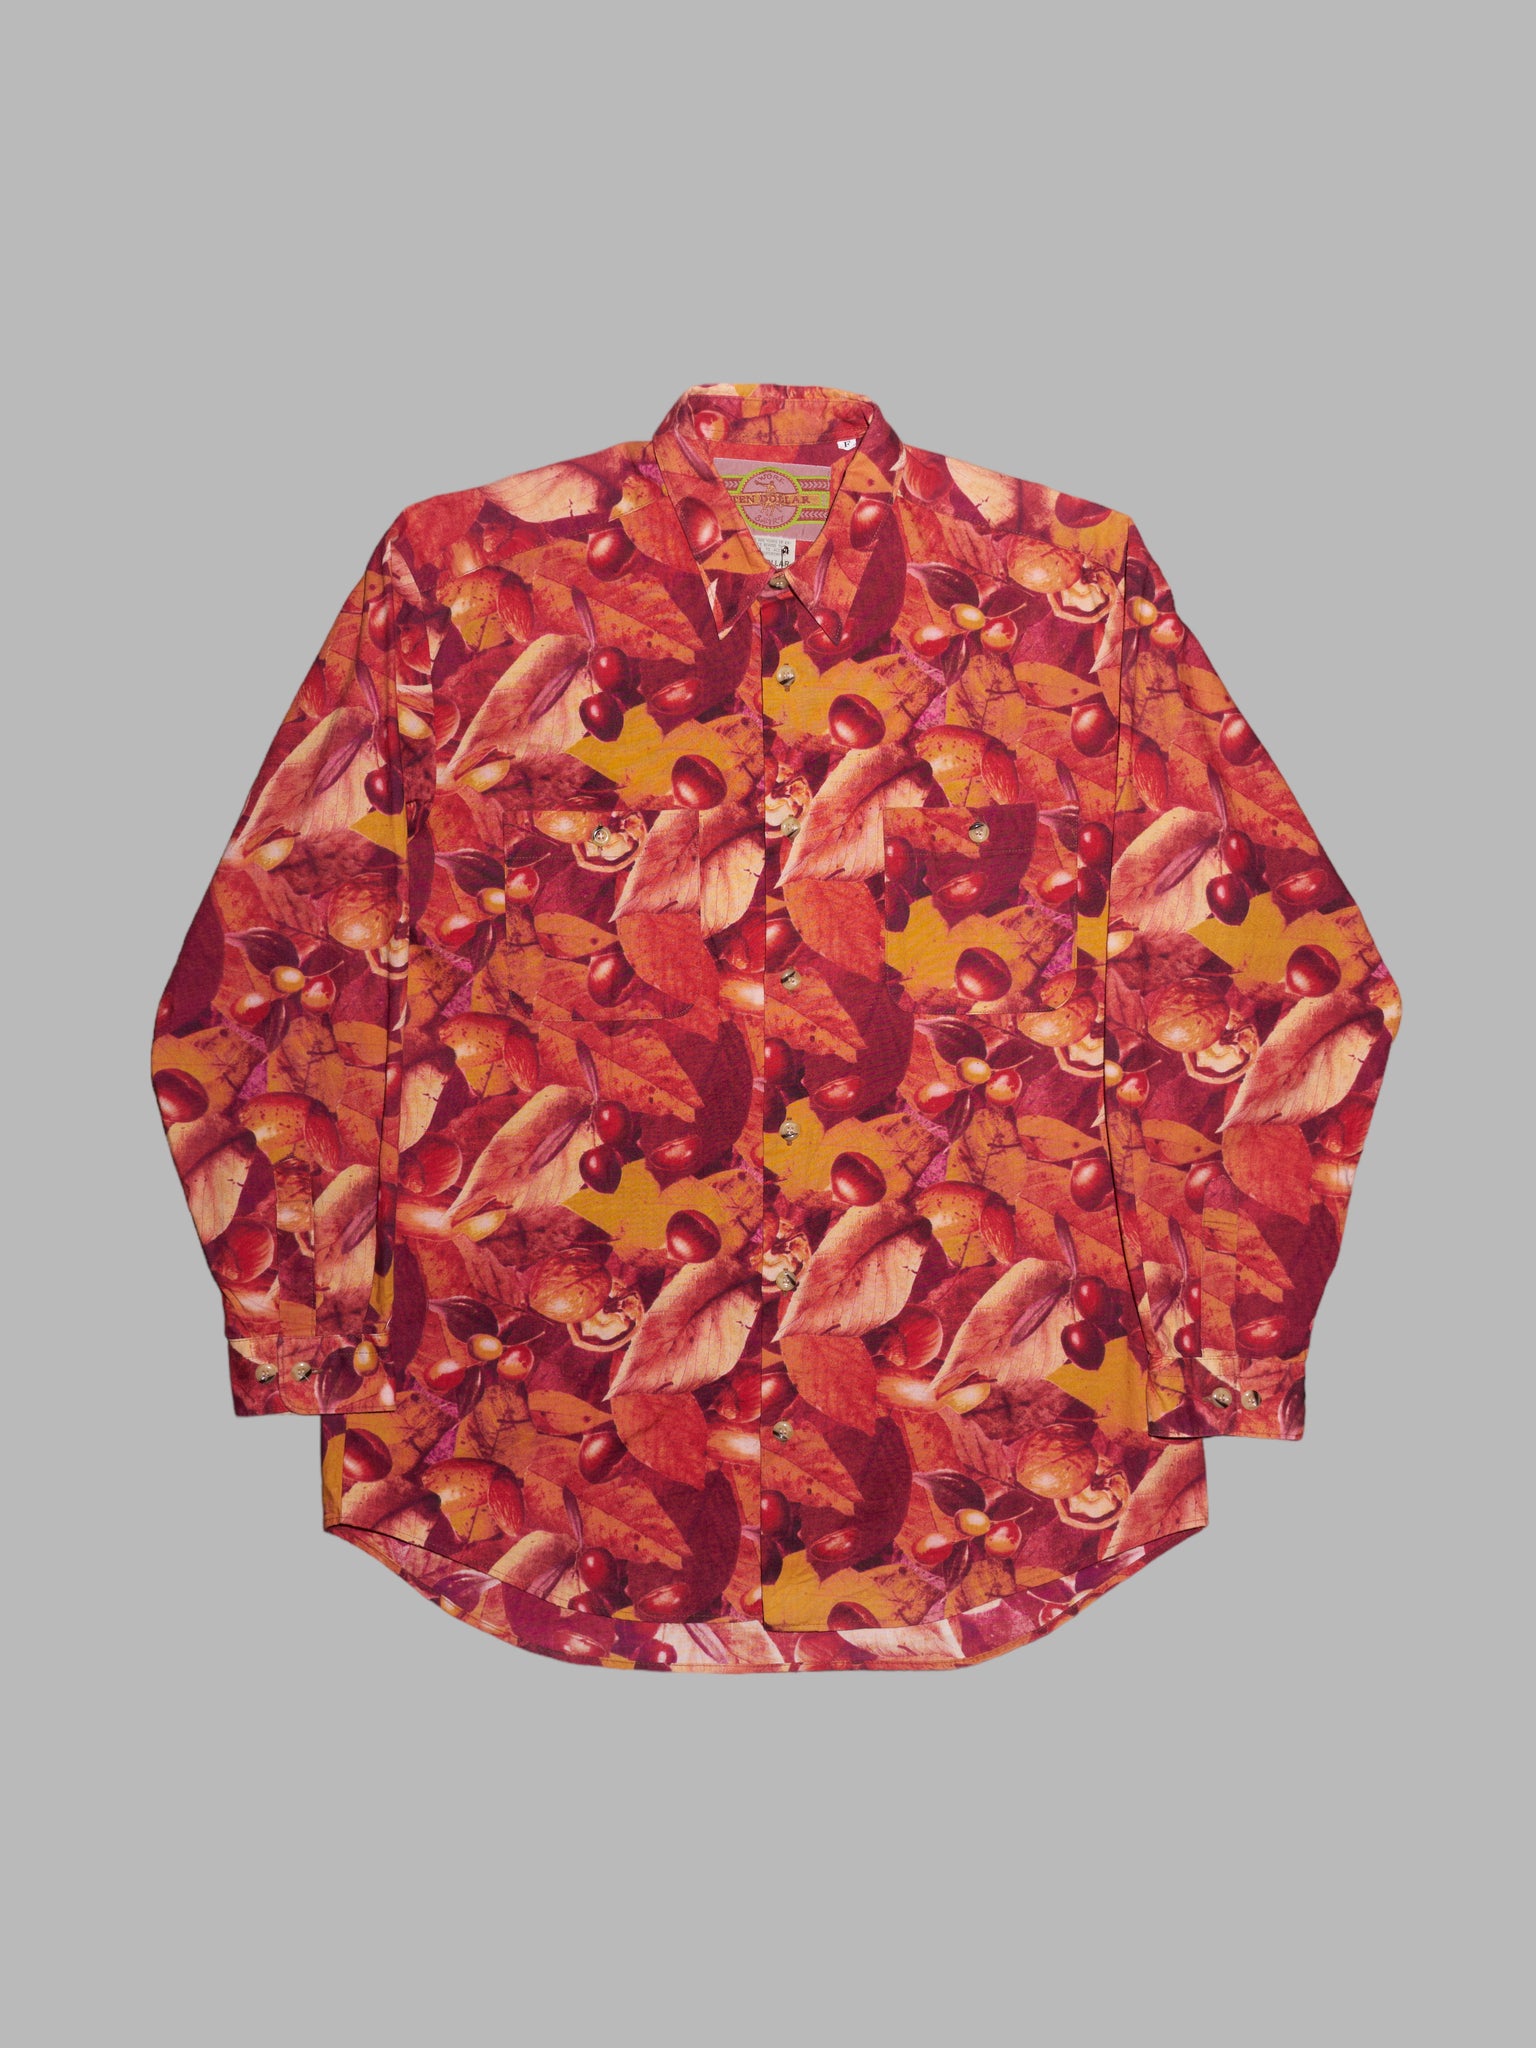 Vintage Ten Dollar red and orange cotton leaf print shirt